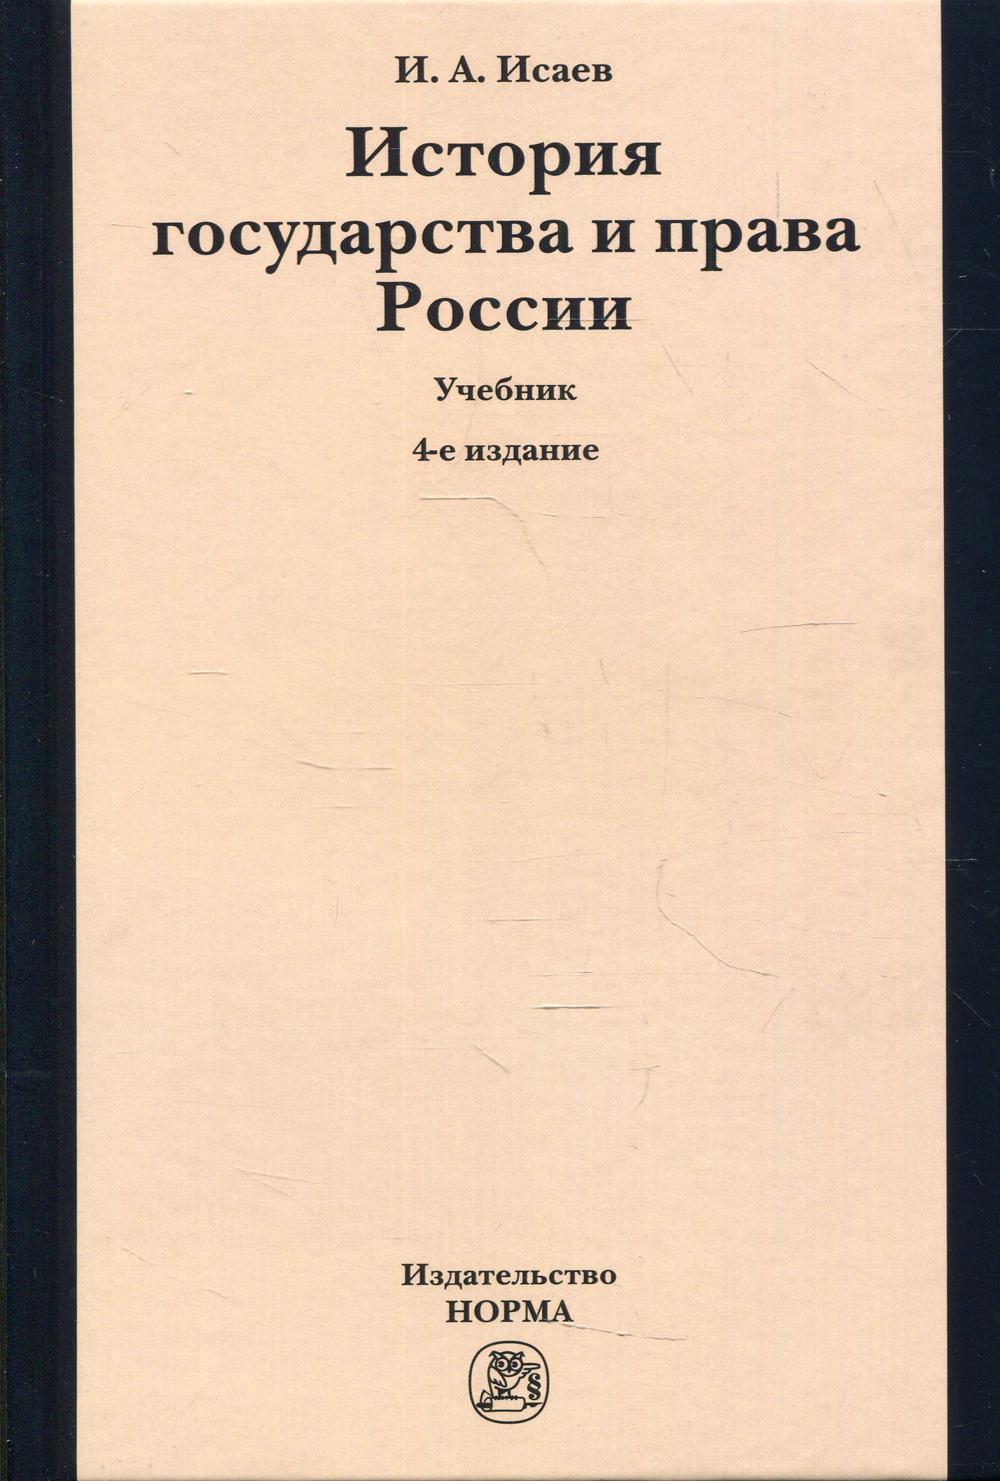 фото Книга история государства и права россии норма